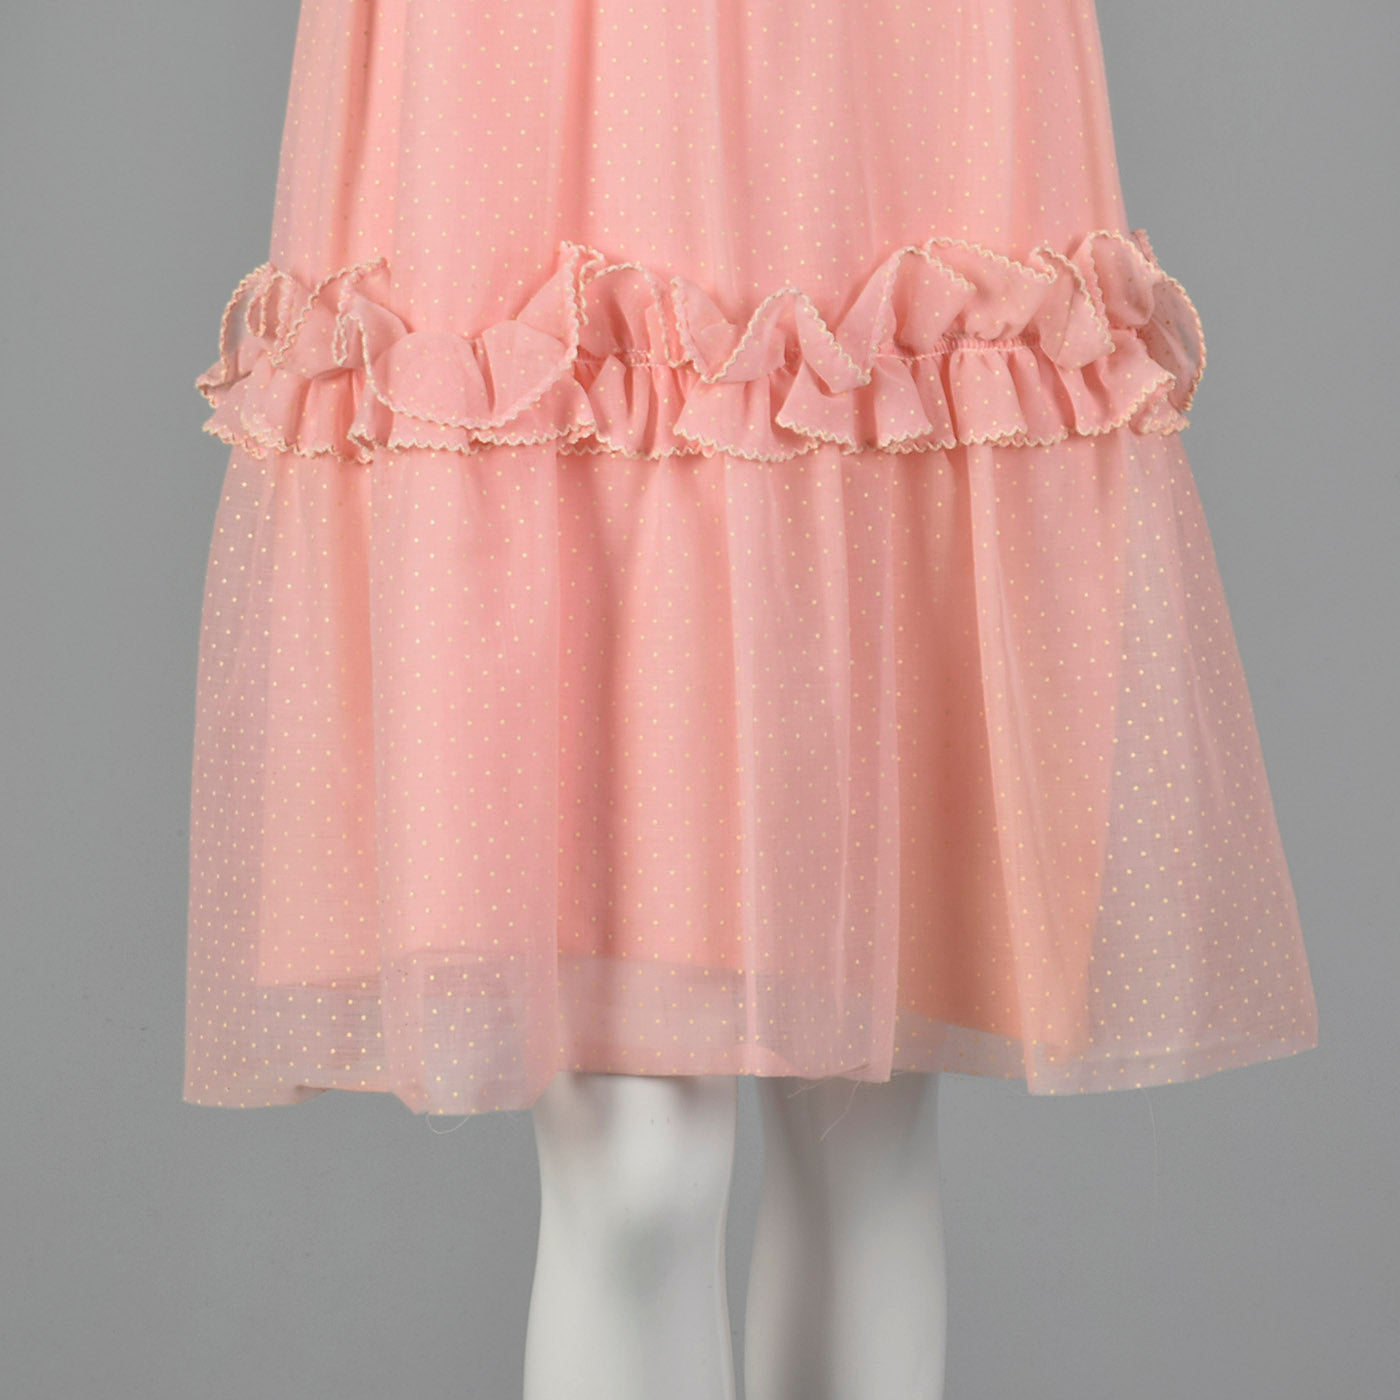 1960s Pink Swiss Dot Dress with Ruffle Trim